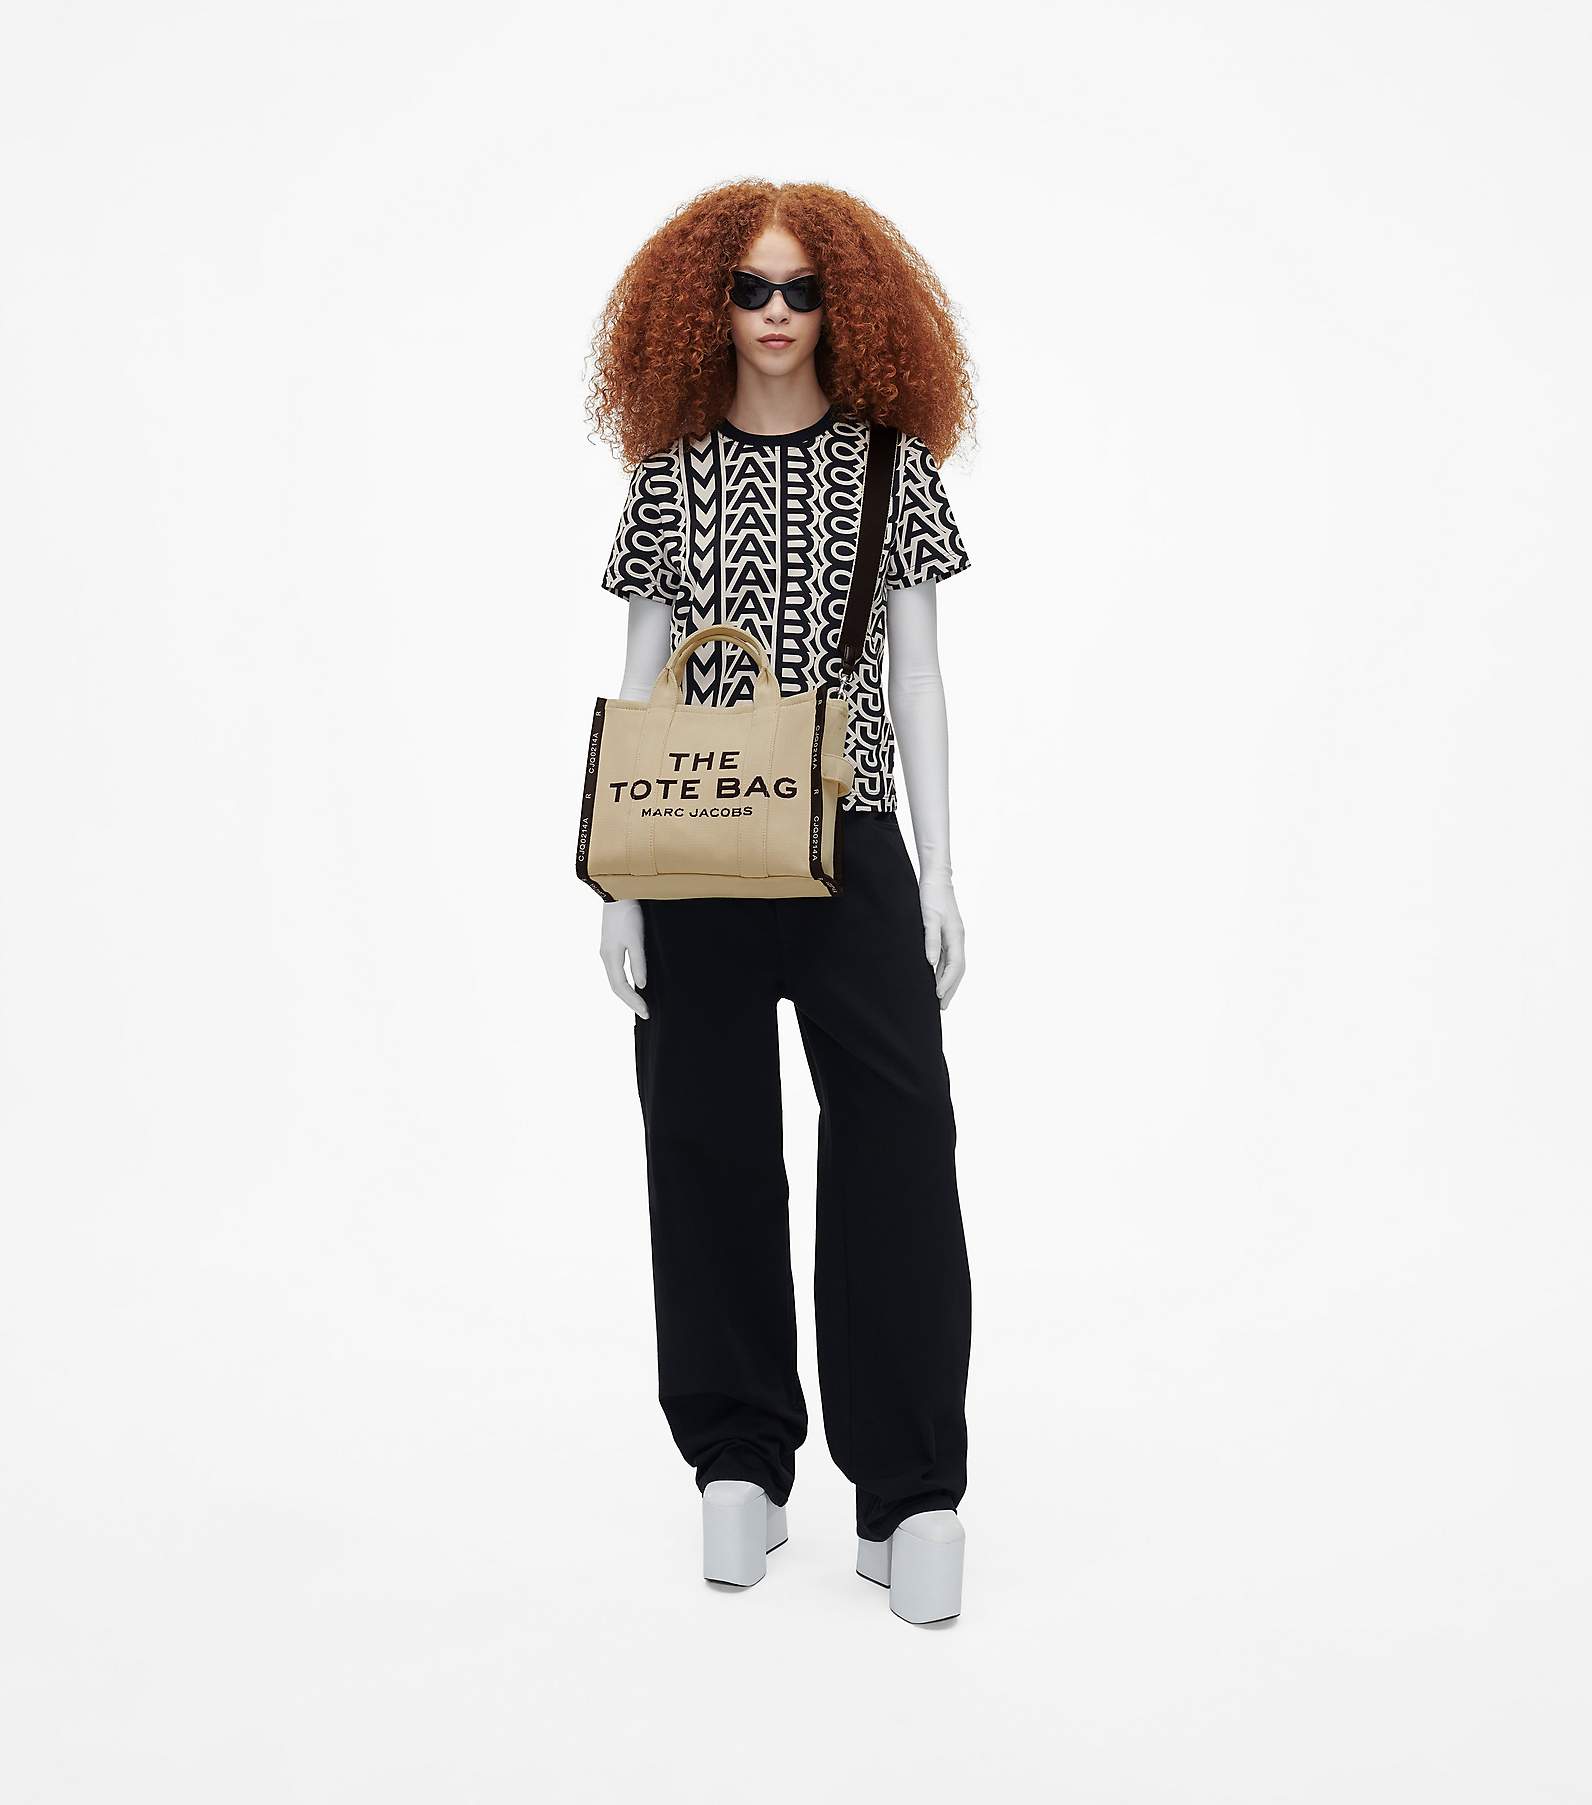  Marc Jacobs Women's The Jacquard Medium Tote Bag